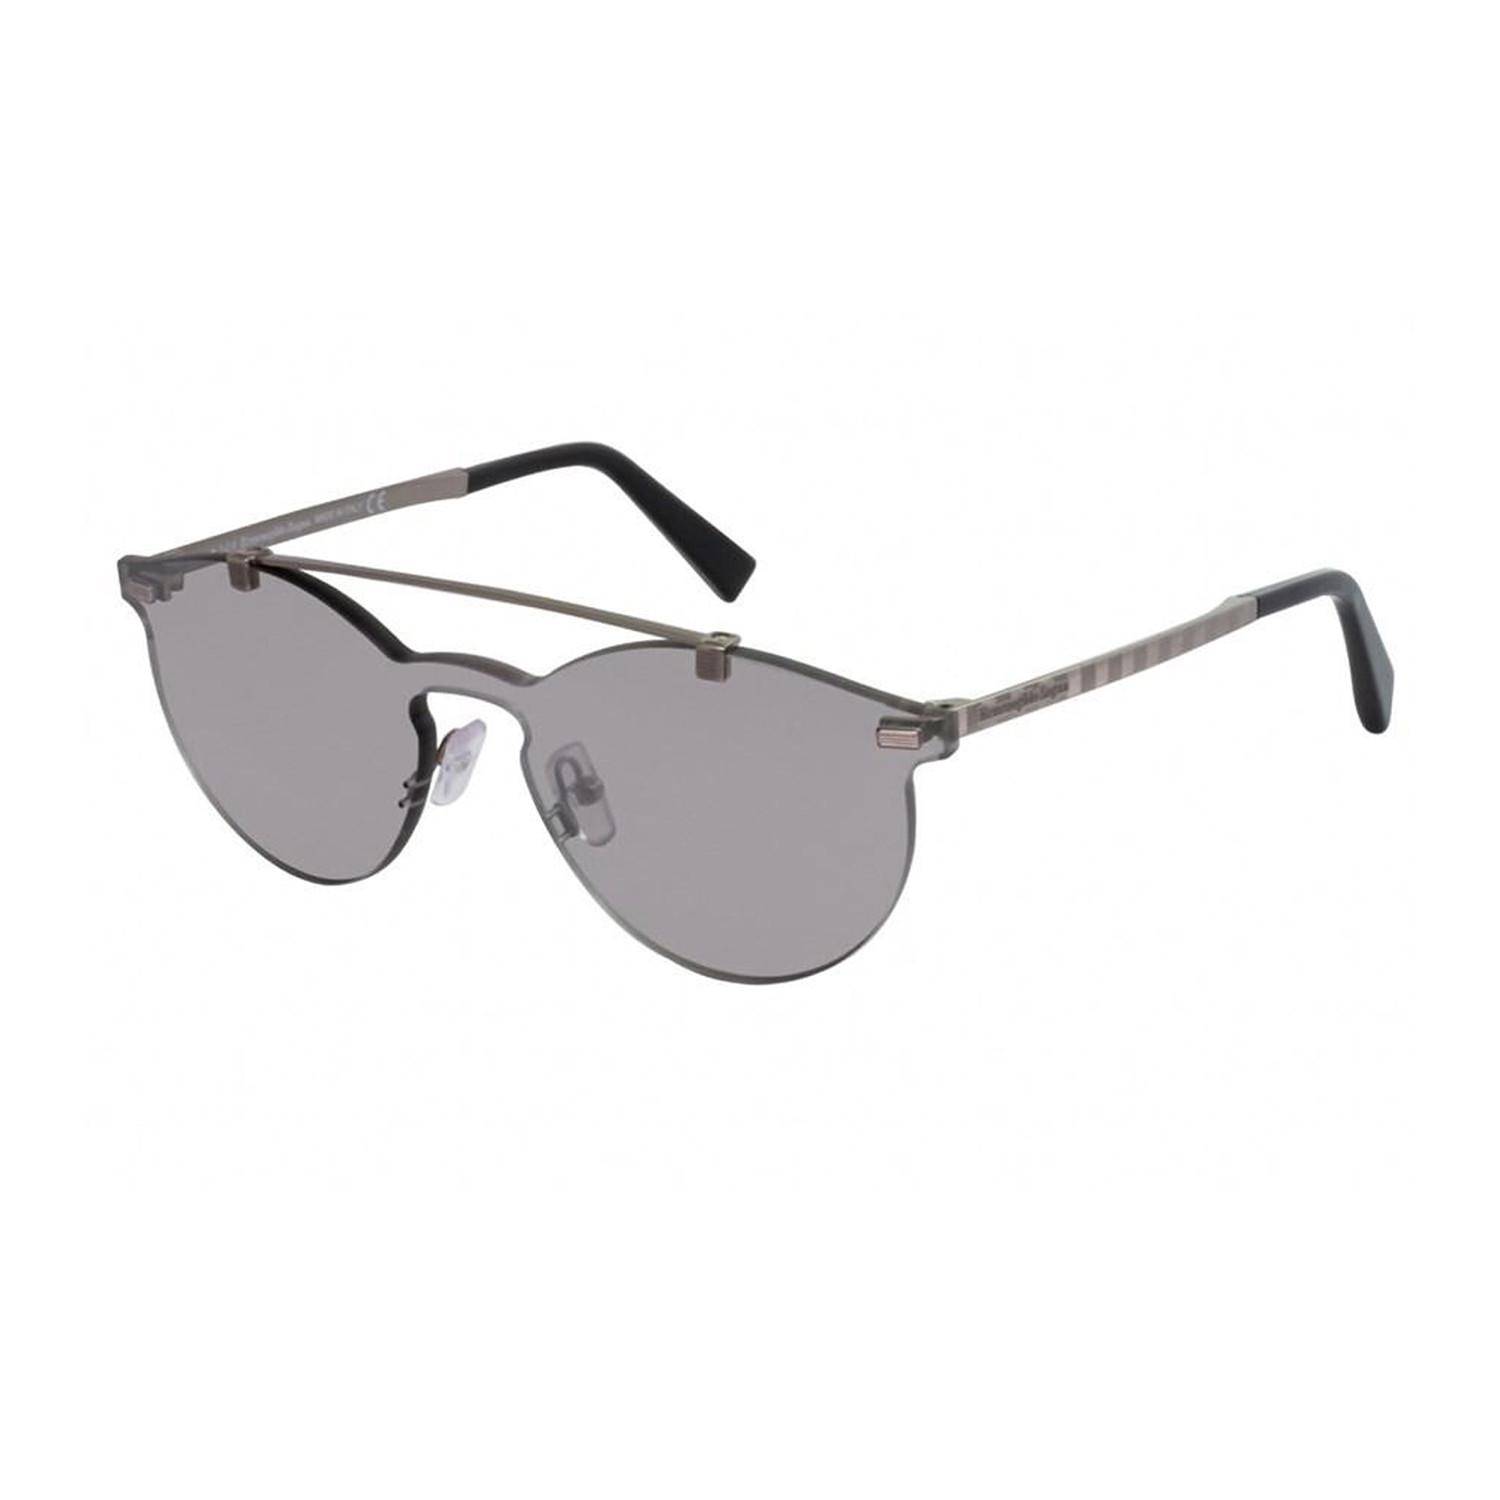 Zegna // Men's Single Lens Sunglasses // Gray + Smoke Mirror - Zegna ...